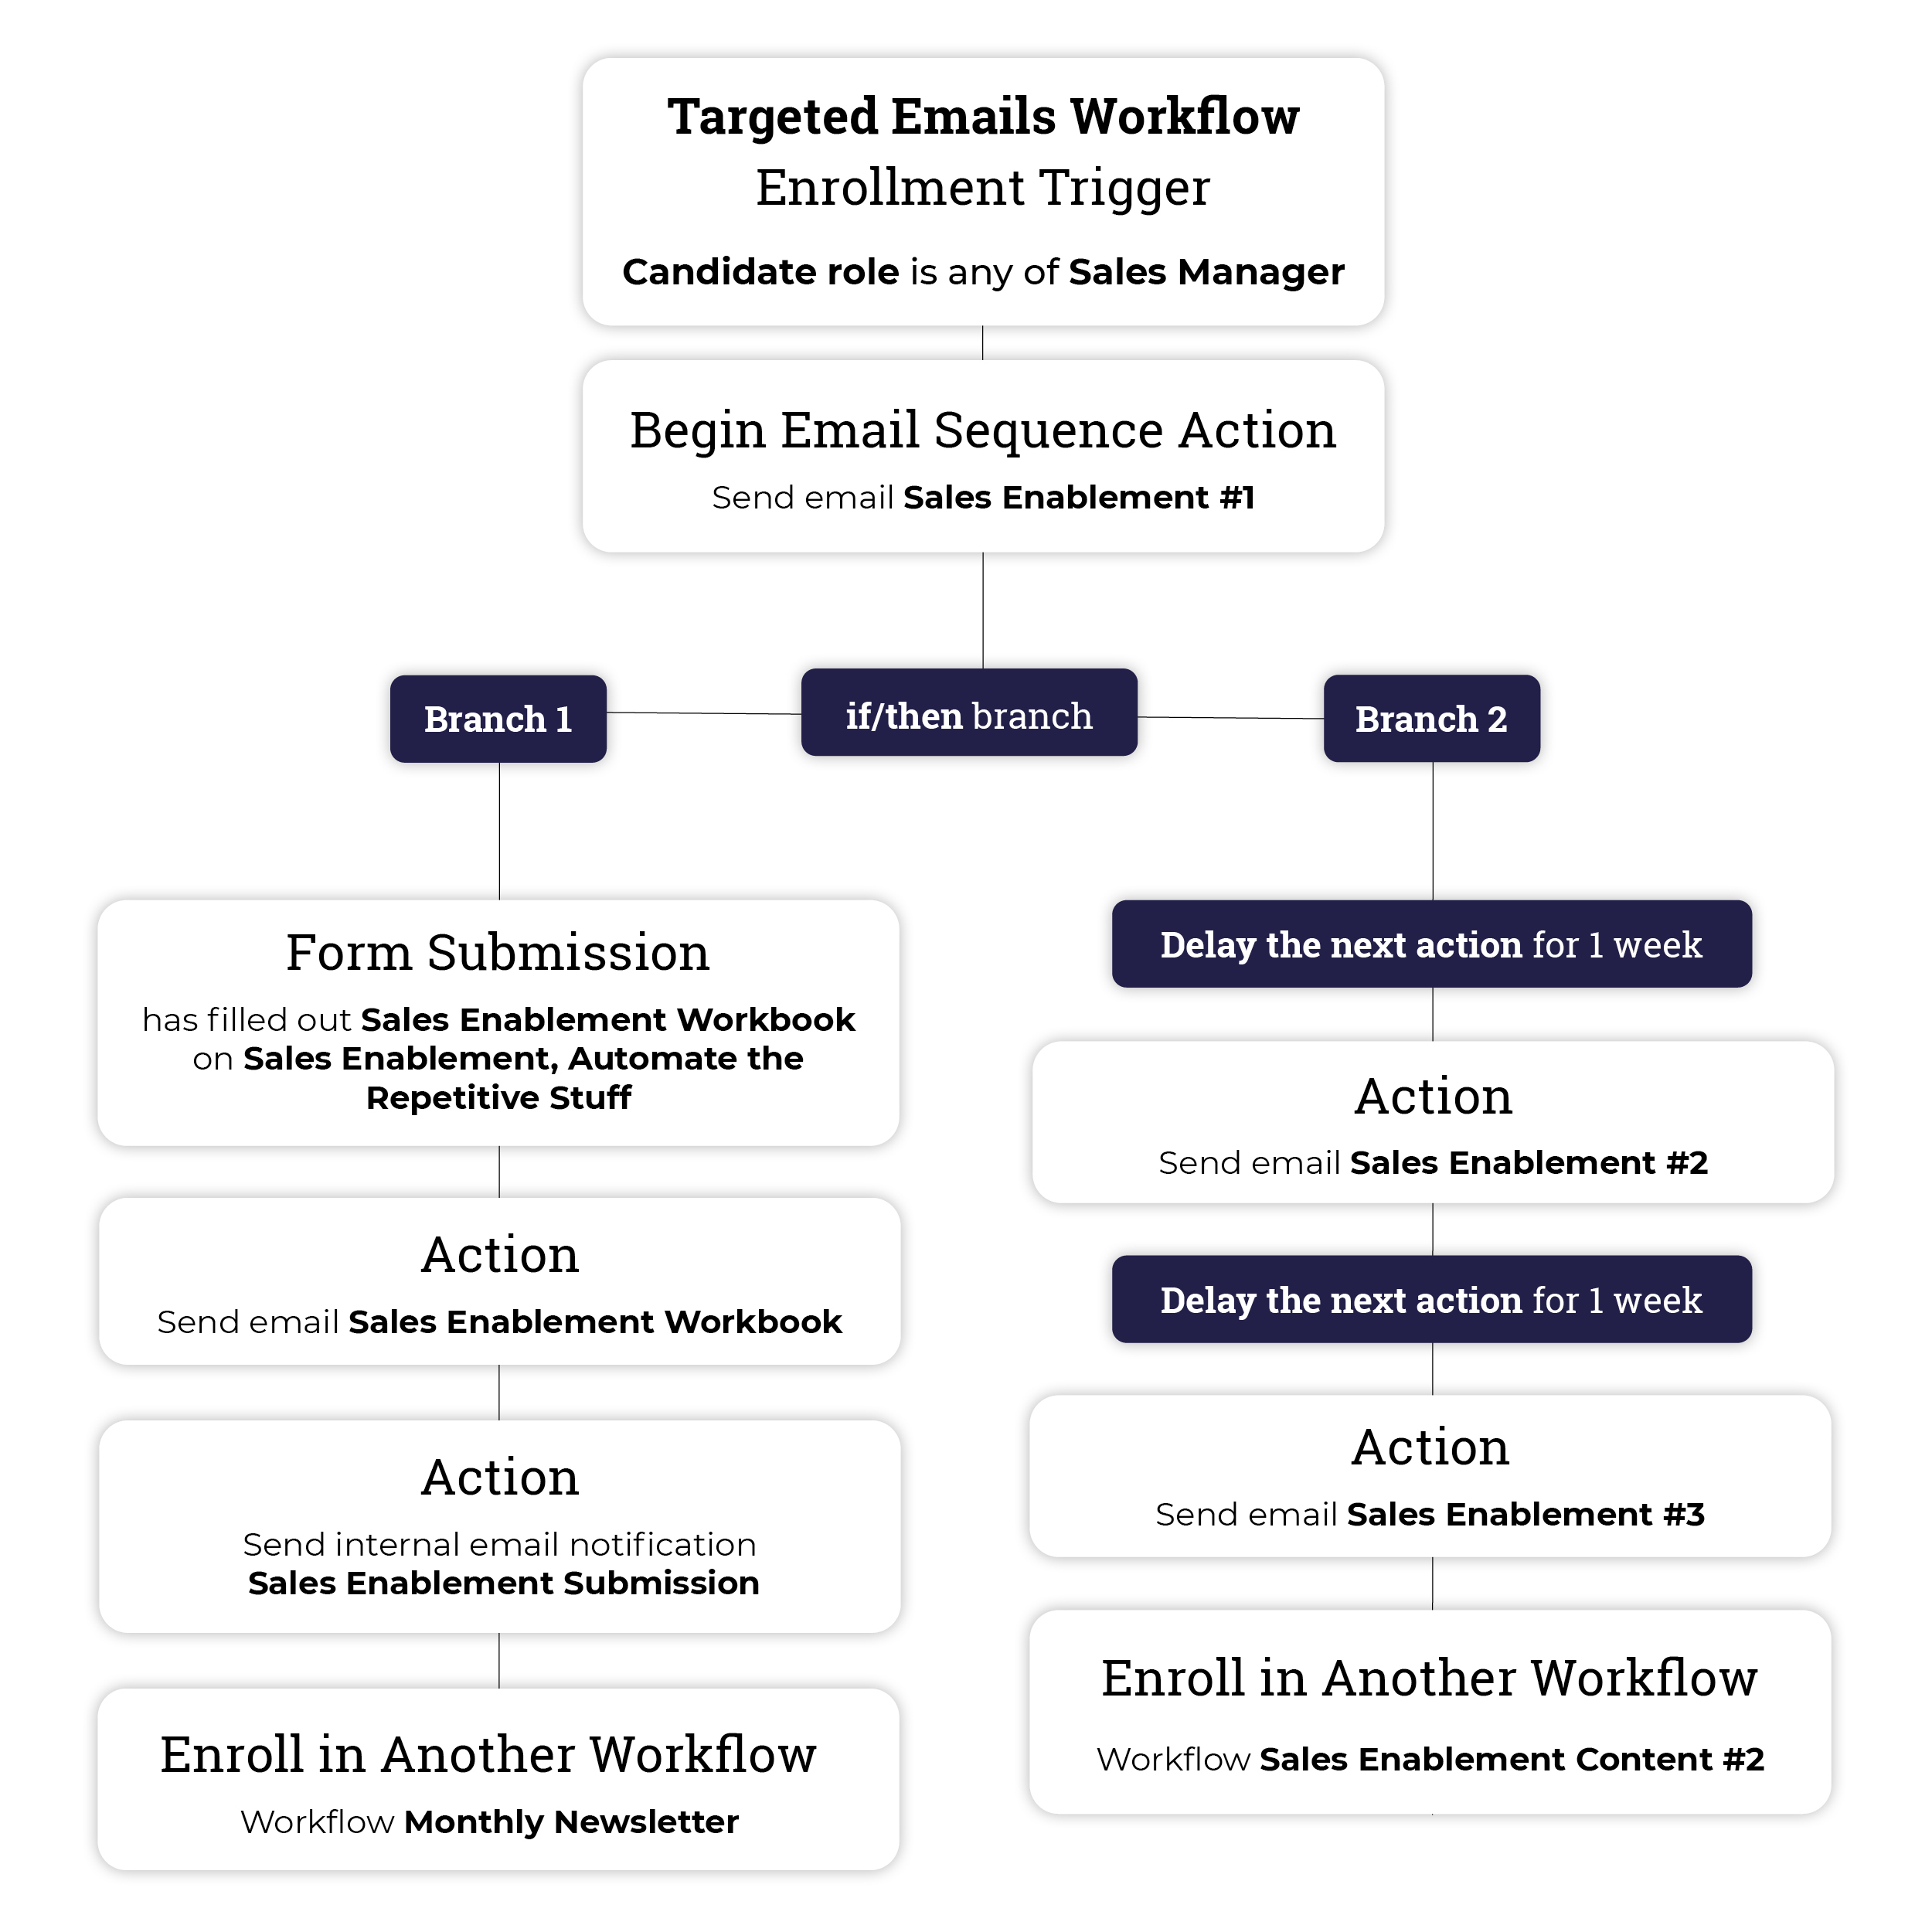 HubSpot Workflow 1: Targeted Emails Flow Diagram